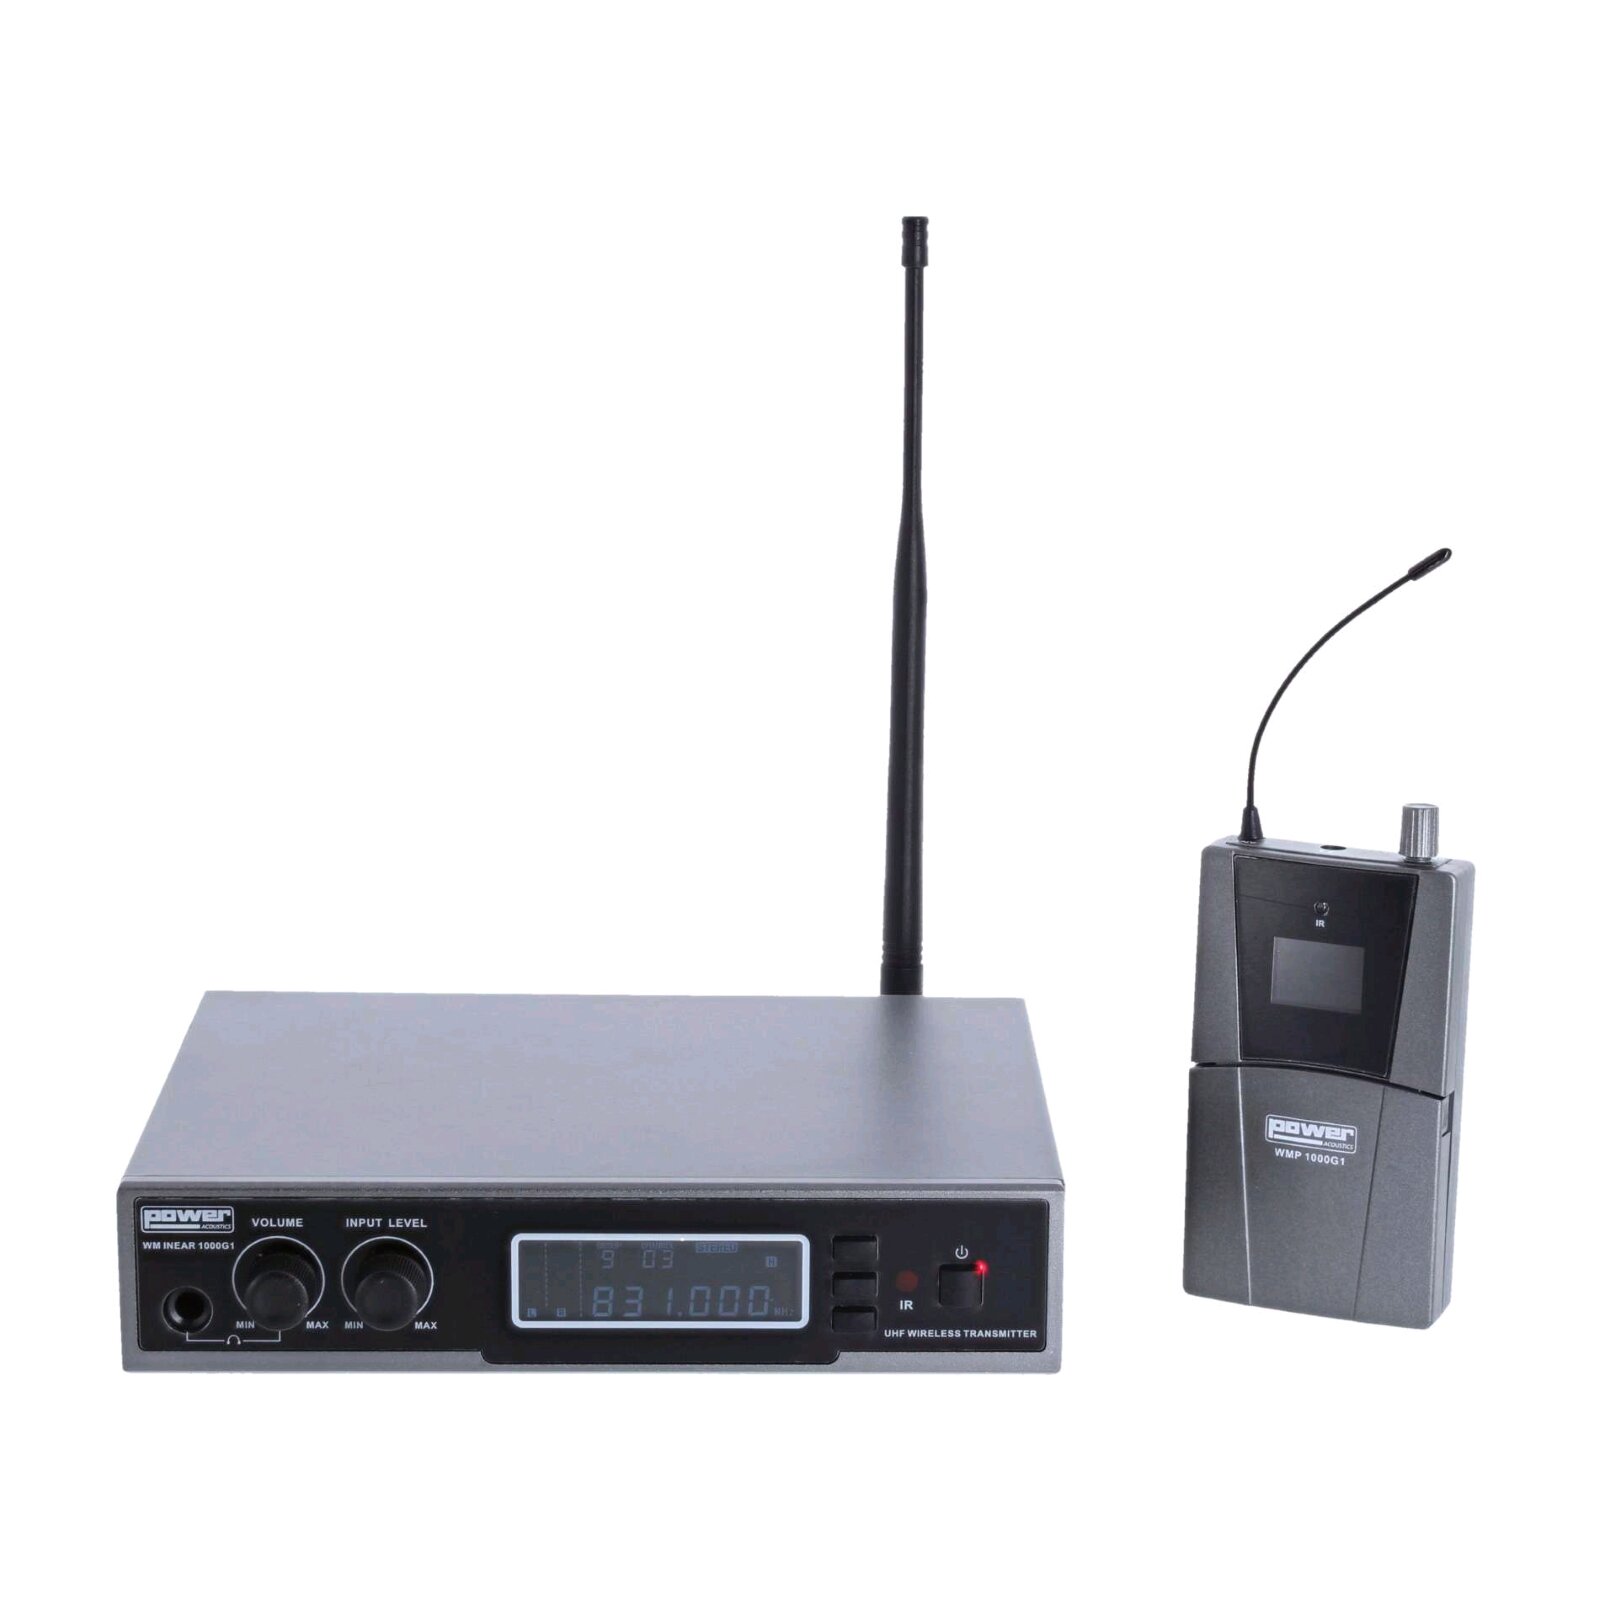 Power Acoustics WM INEAR 1000 G1 Drahtloses Di-Ear-Monitoring-System 823-832 MHz : photo 1